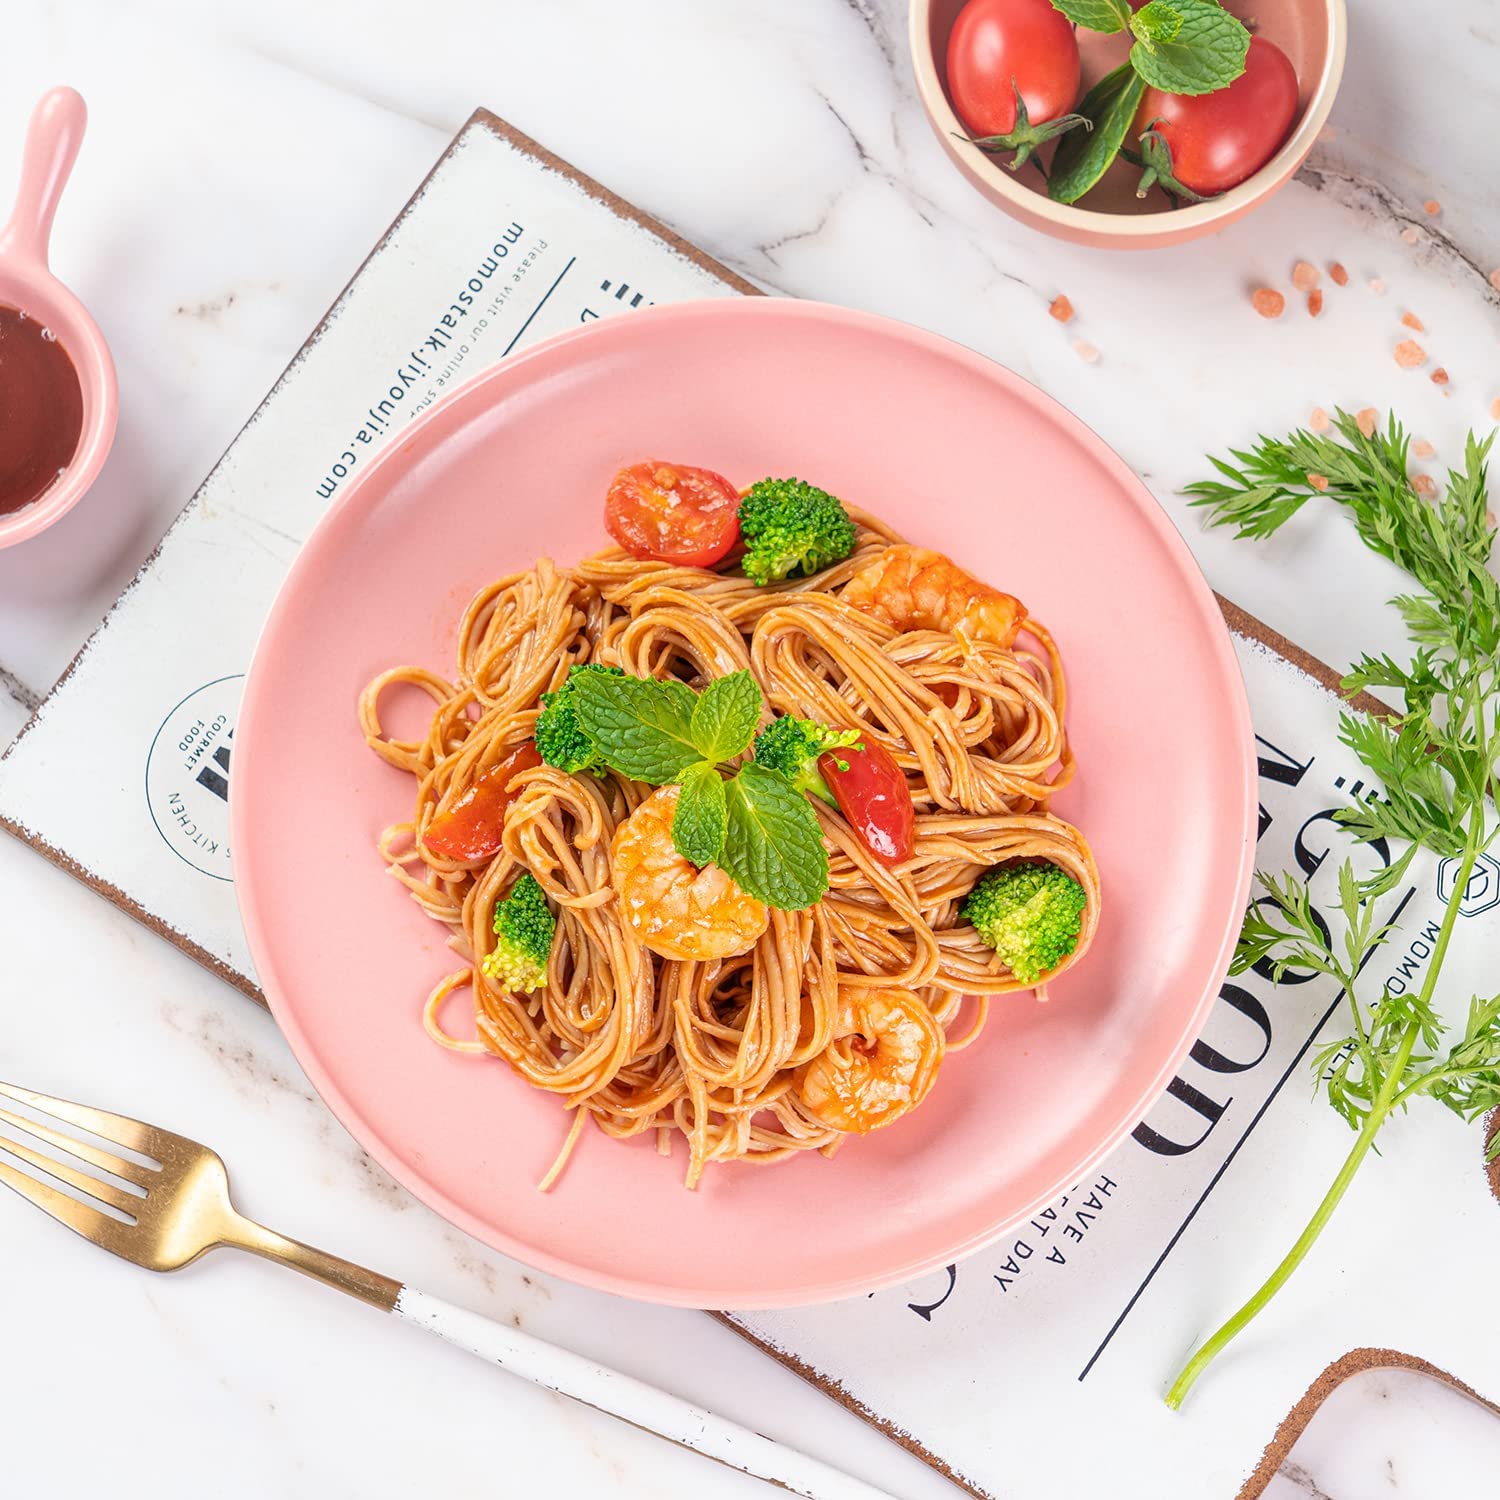 100% organic vegan soybean pasta keto friendly low carbs high protein wholesome healthy noodles gluten free spaghetti